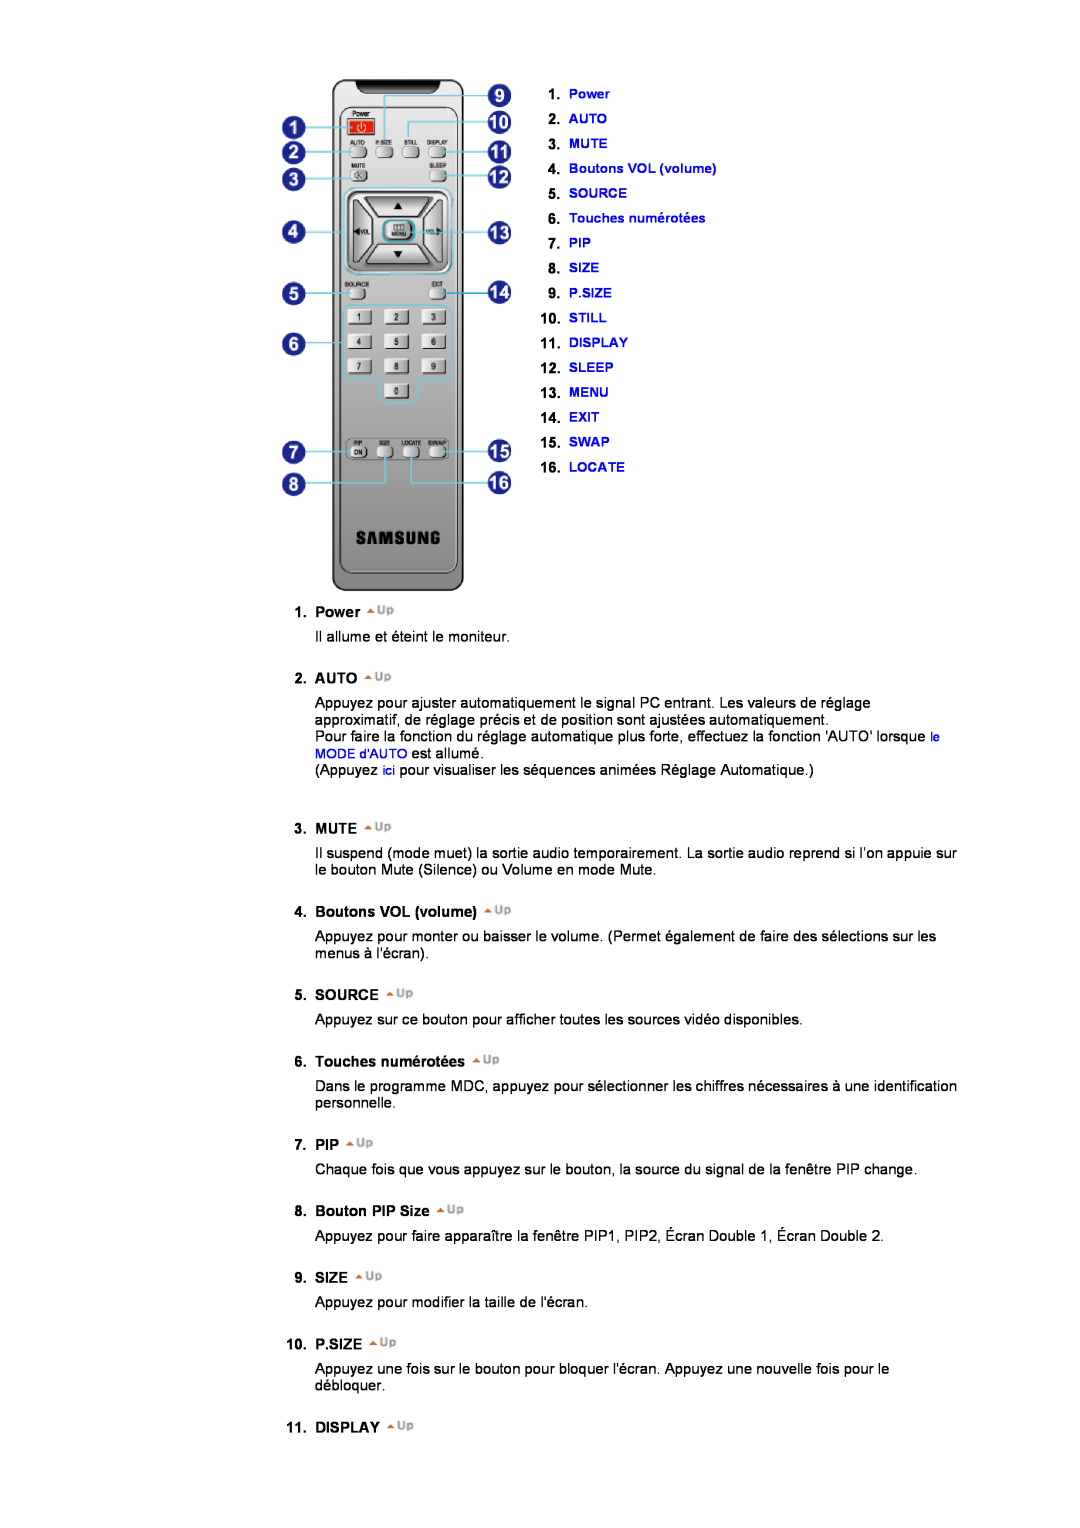 Samsung CK40PSNBF/EDC Power, Auto, Mute, Boutons VOL volume, Source, Touches numérotées, Pip, Bouton PIP Size, 10. P.SIZE 